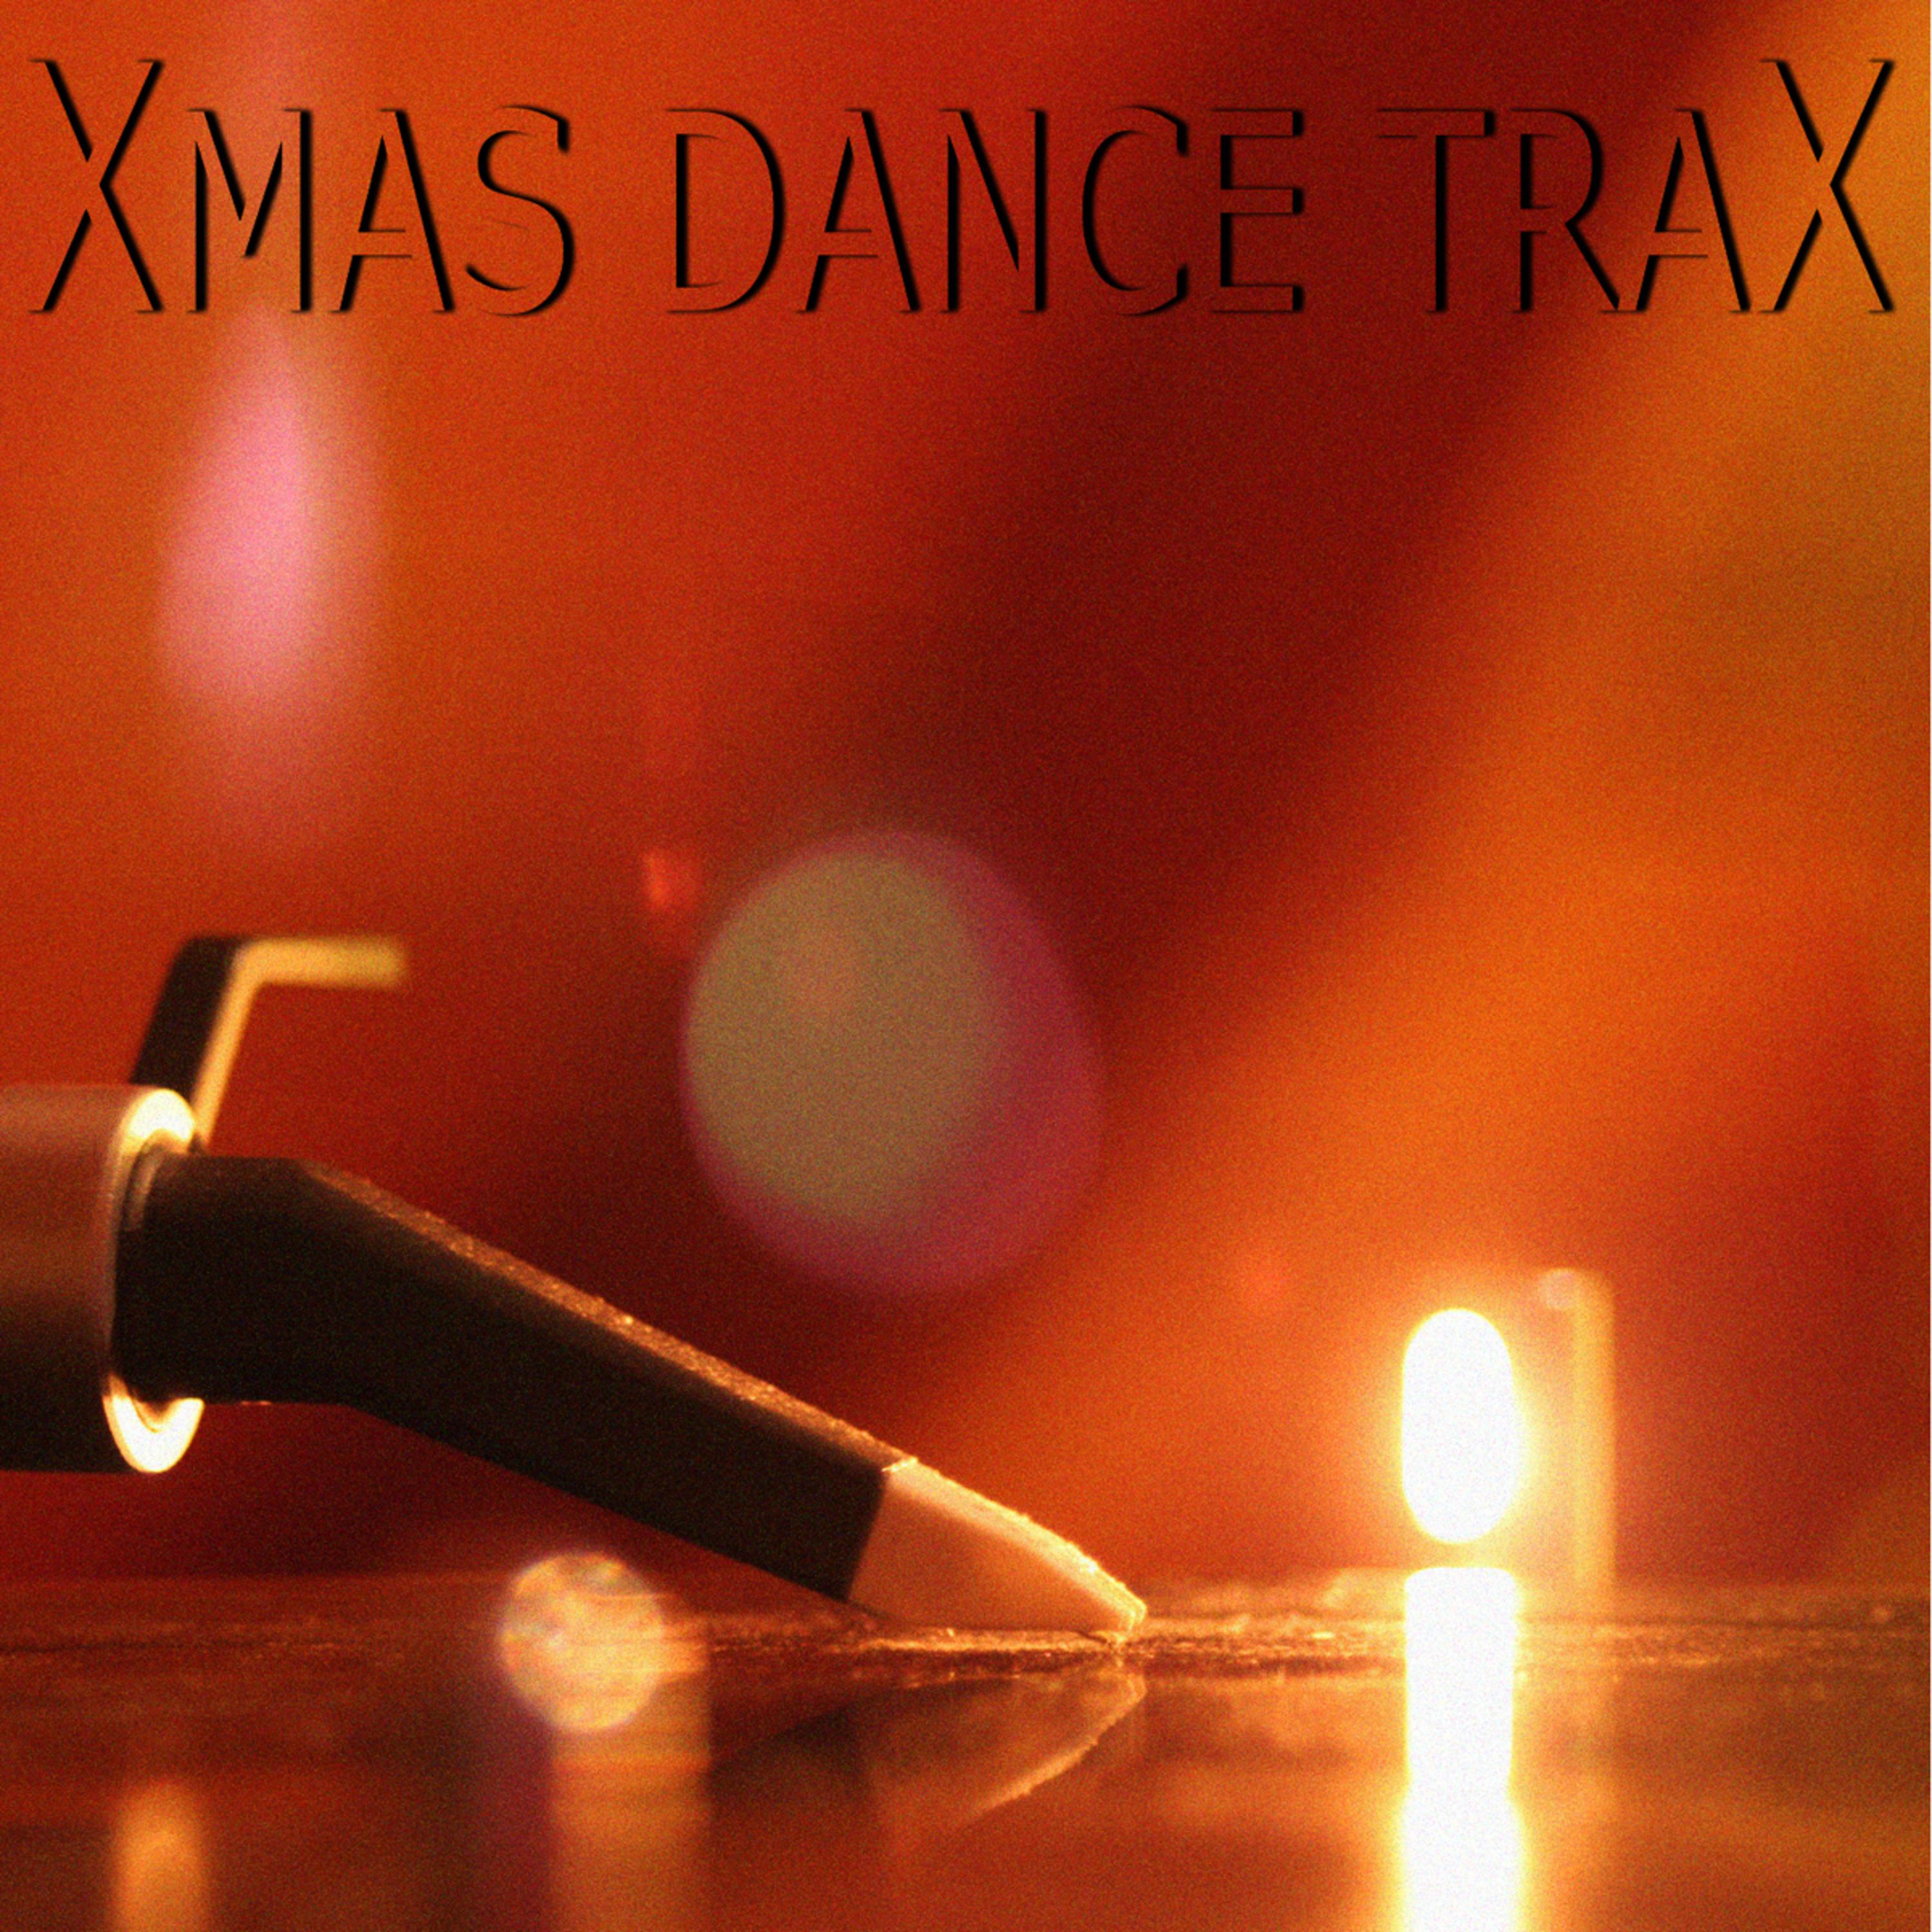 Xmas Dance Trax 2010 (Christmas Songs in Electro House & Techno Trance Mixes)